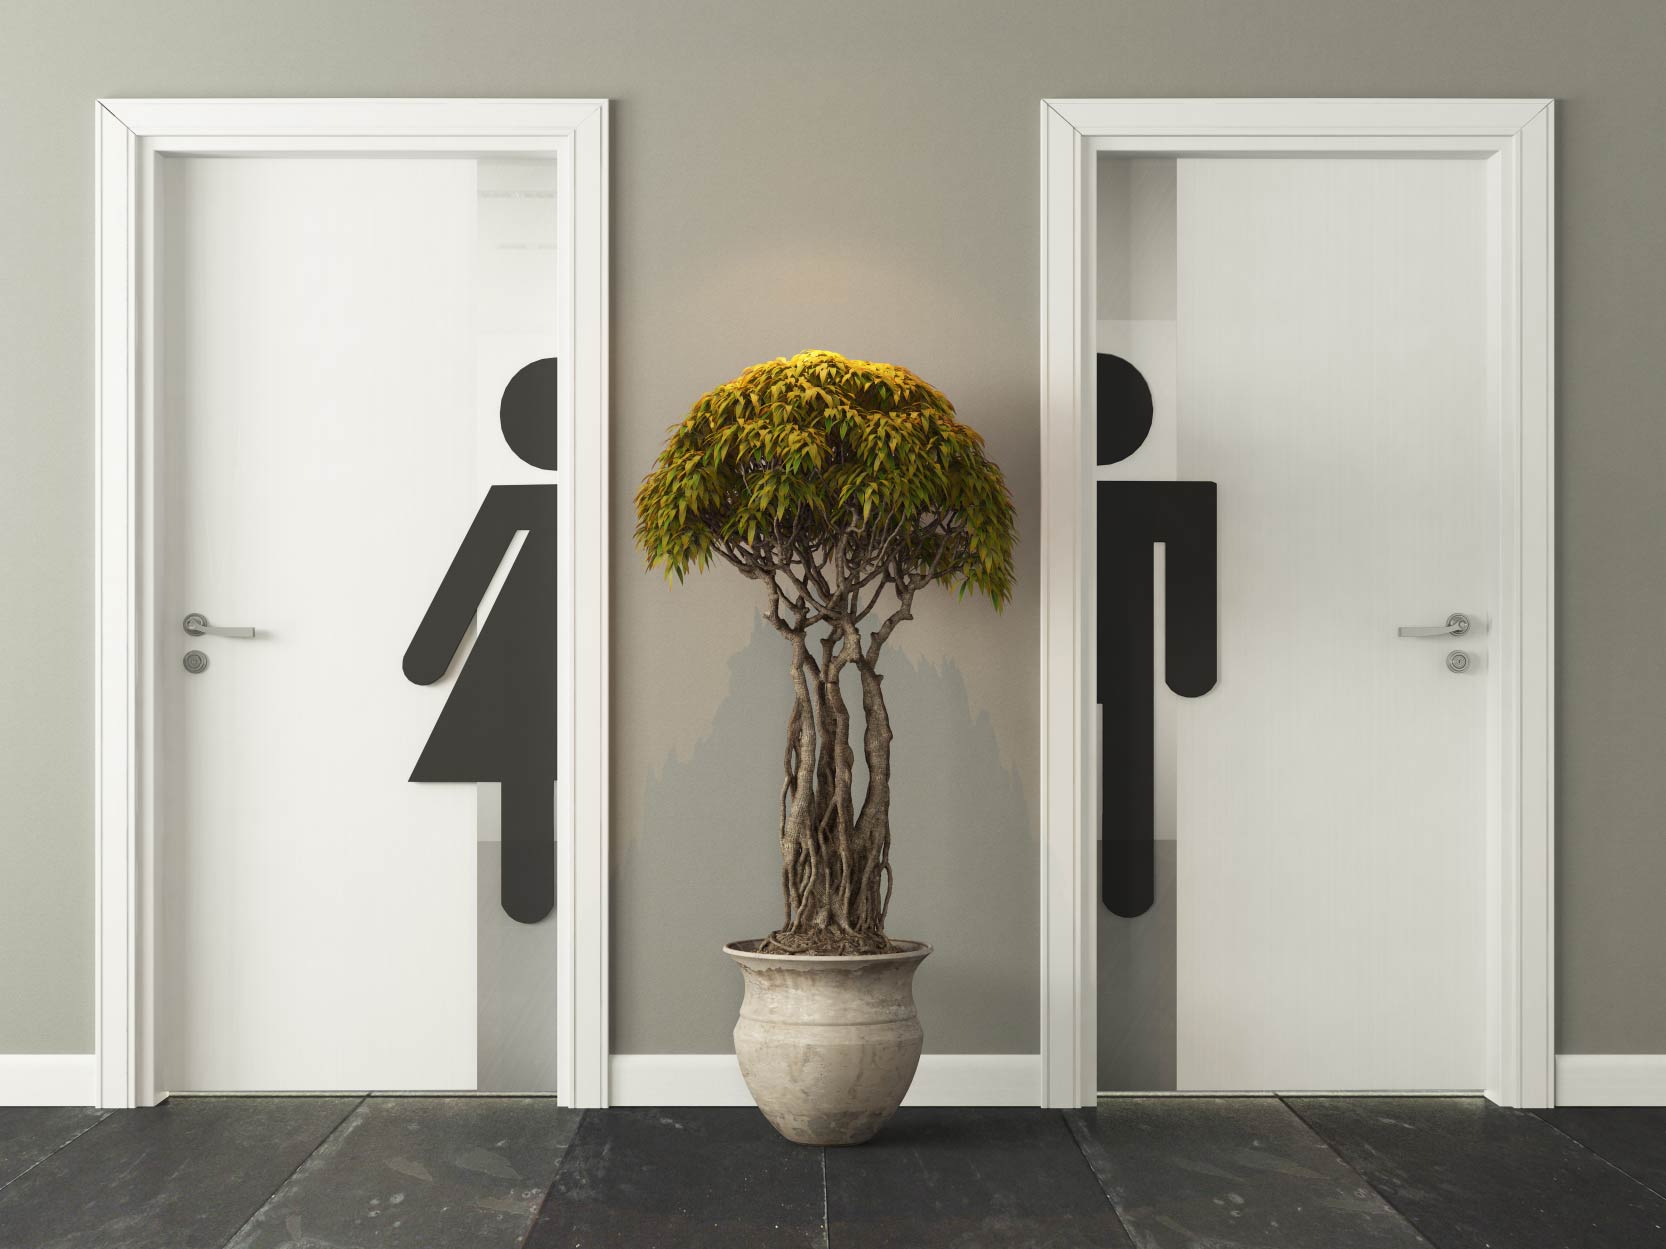 Sticker WC Toilette Homme Femme Pictogramme Moderne